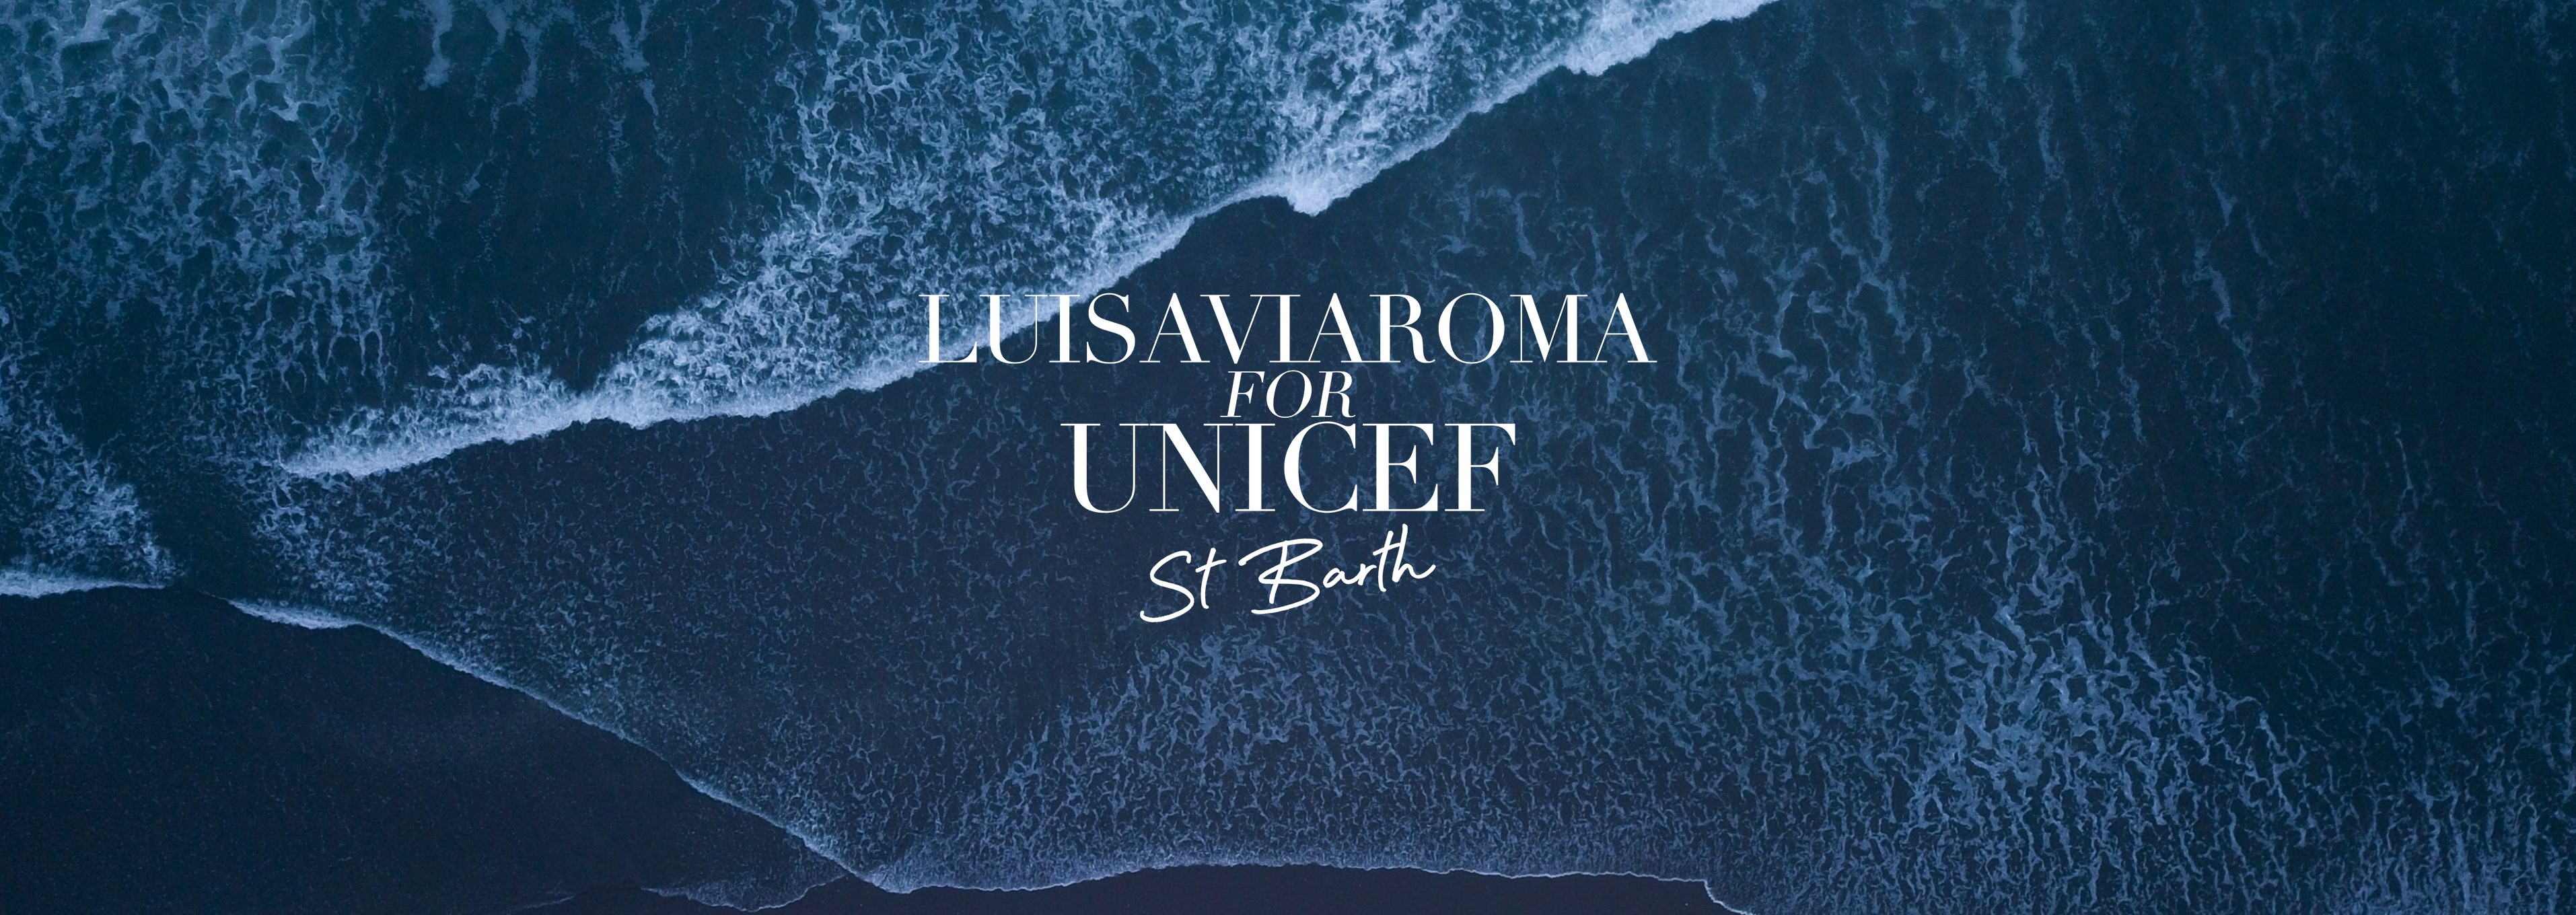 LuisaViaRoma for Unicef a St. Barth